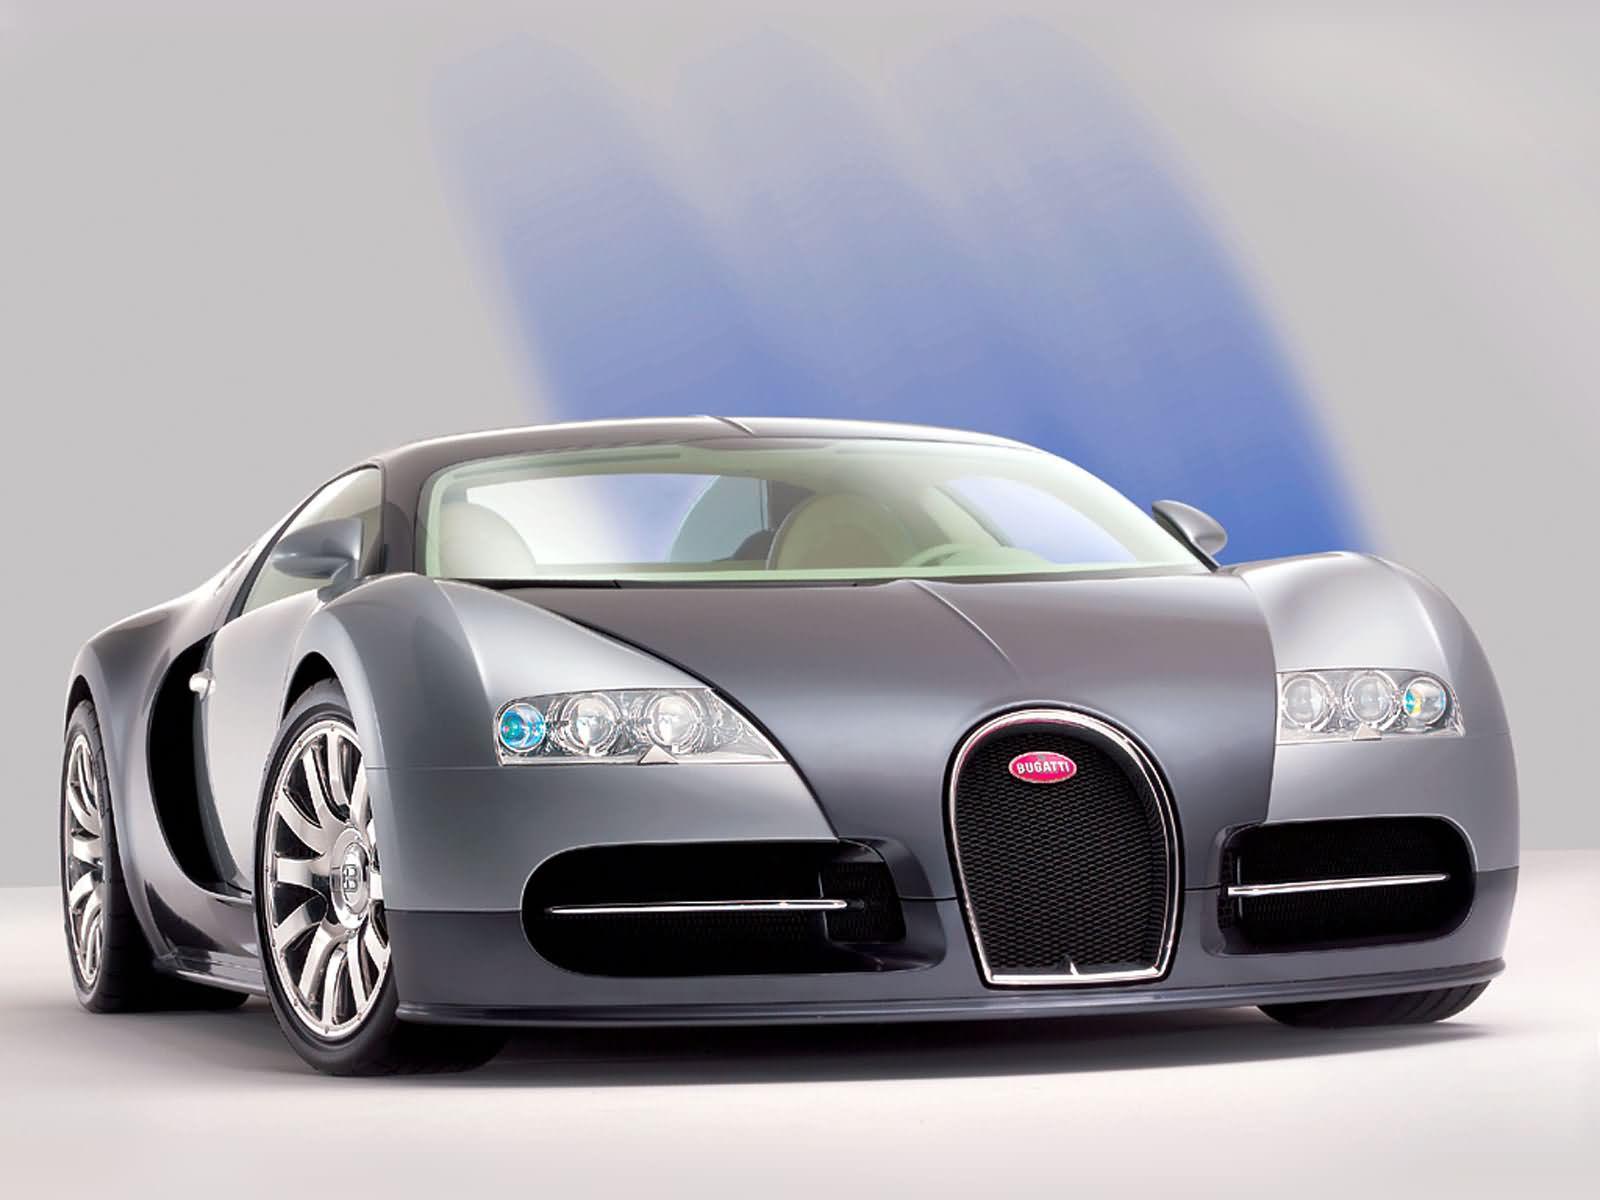 Car Wallpaper: Bugatti Veyron Background